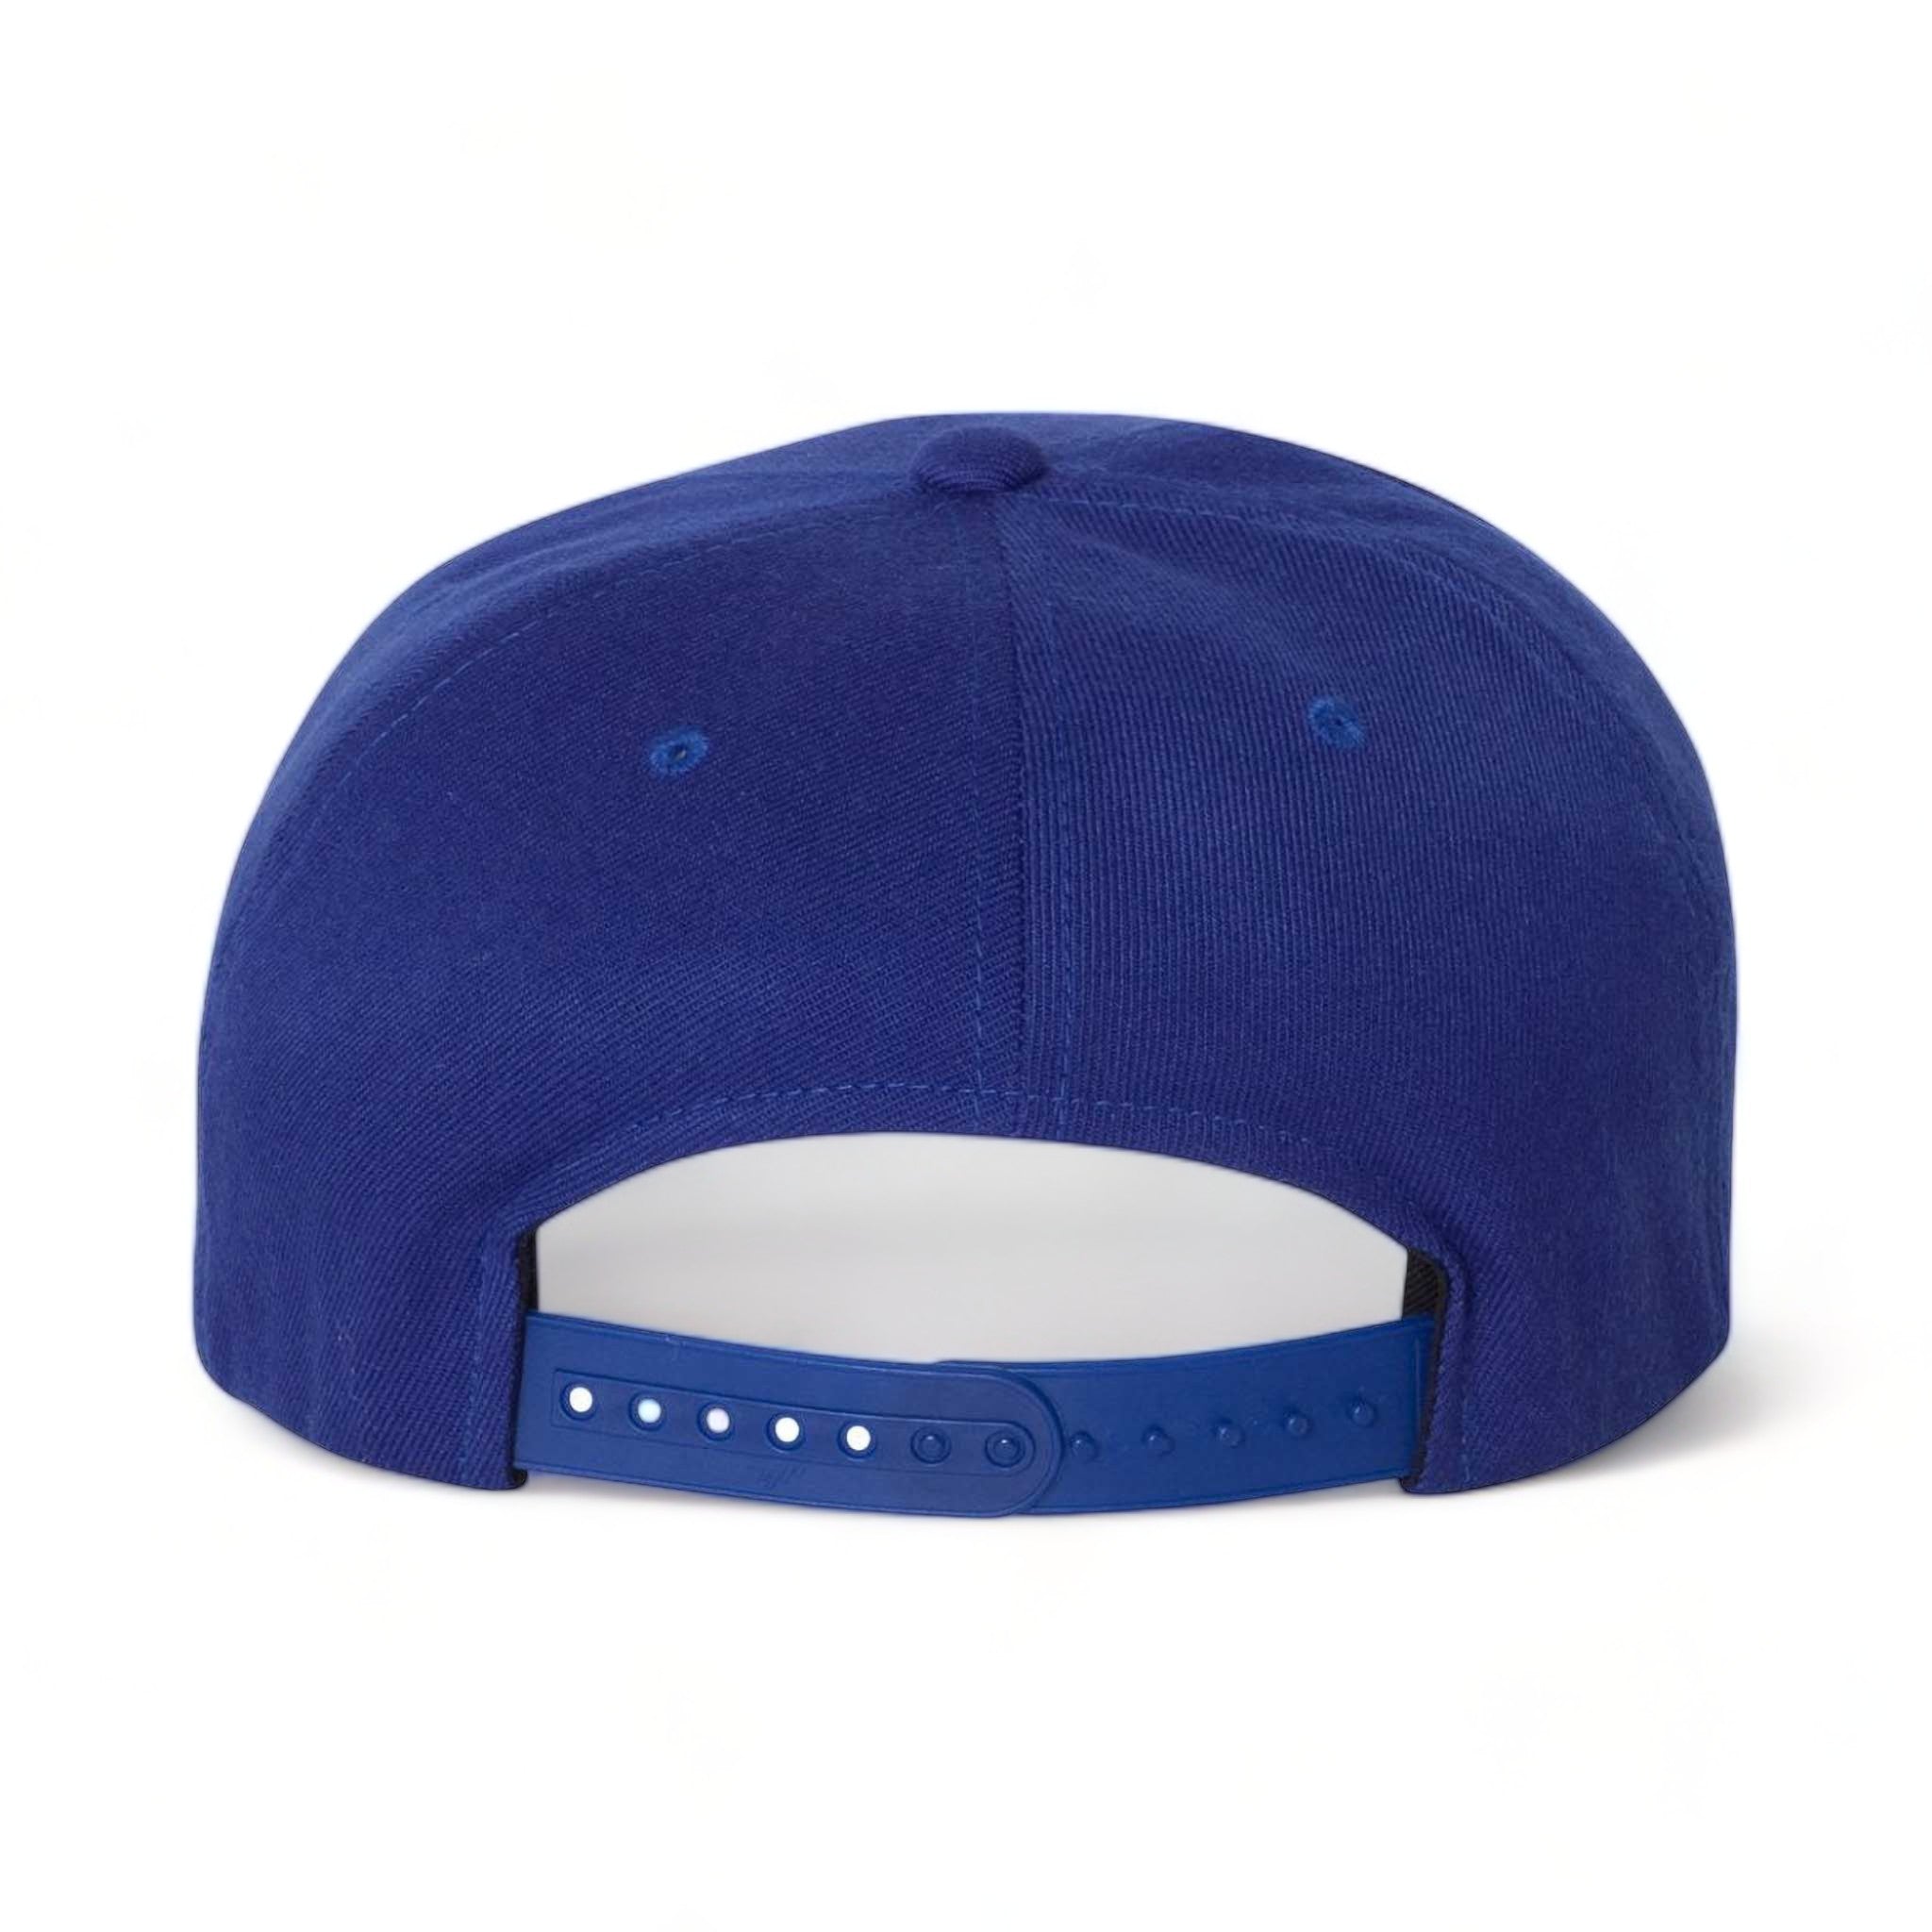 Back view of Flexfit 110F custom hat in royal blue